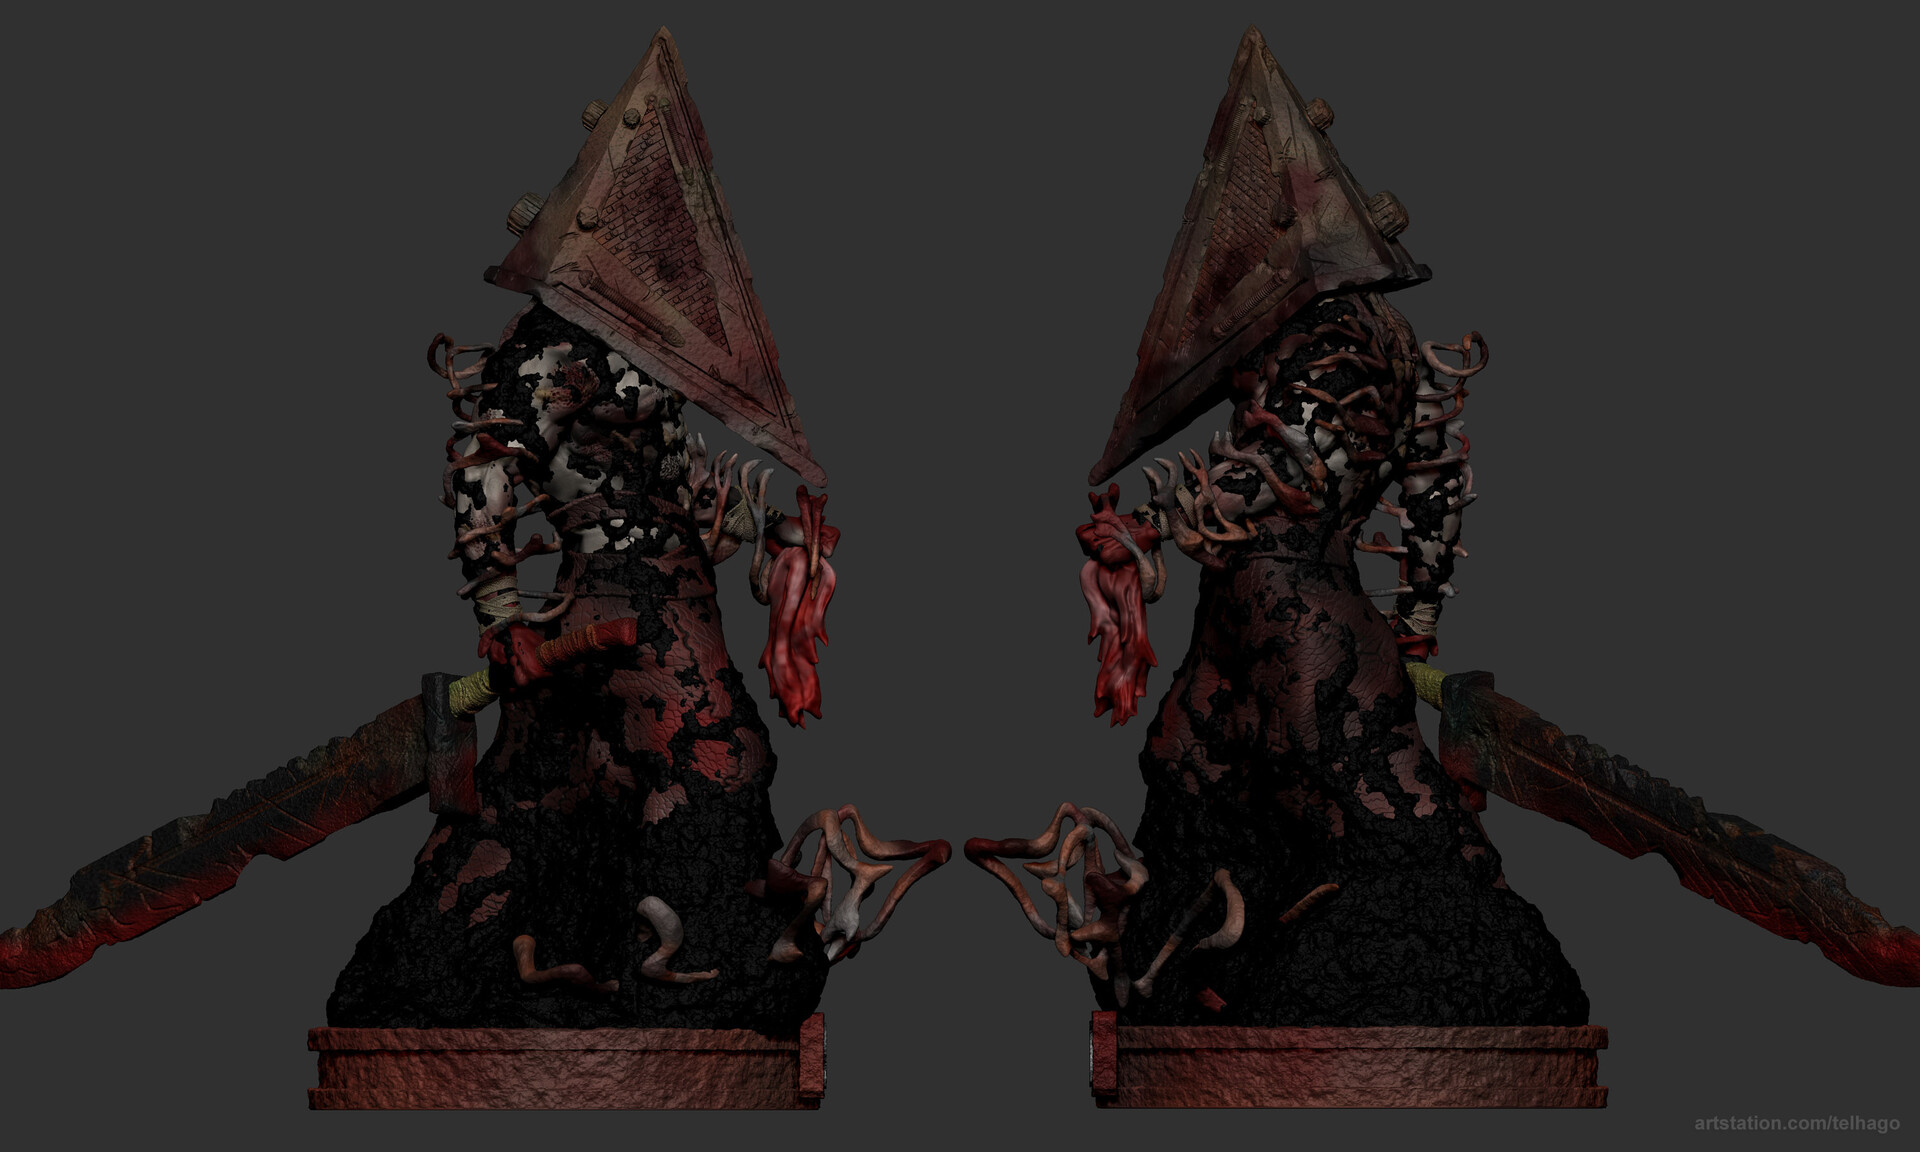 Pyramid Head (Silent Hill) Render by DemonFamily on DeviantArt